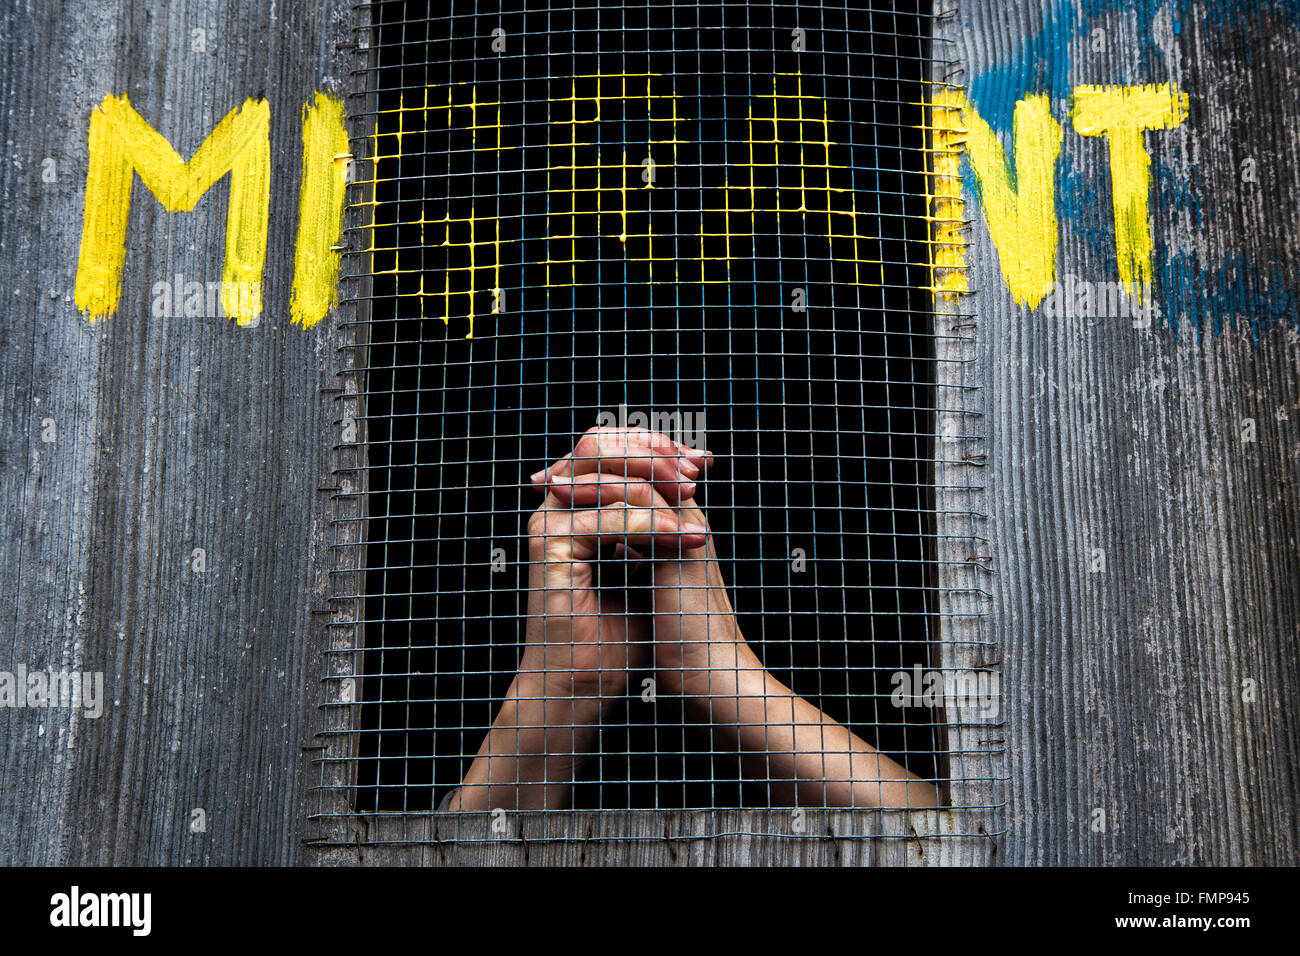 Hände hinter Bars, Graffiti Lesung Migrant, Unterstützung für Flüchtlinge Stockfoto